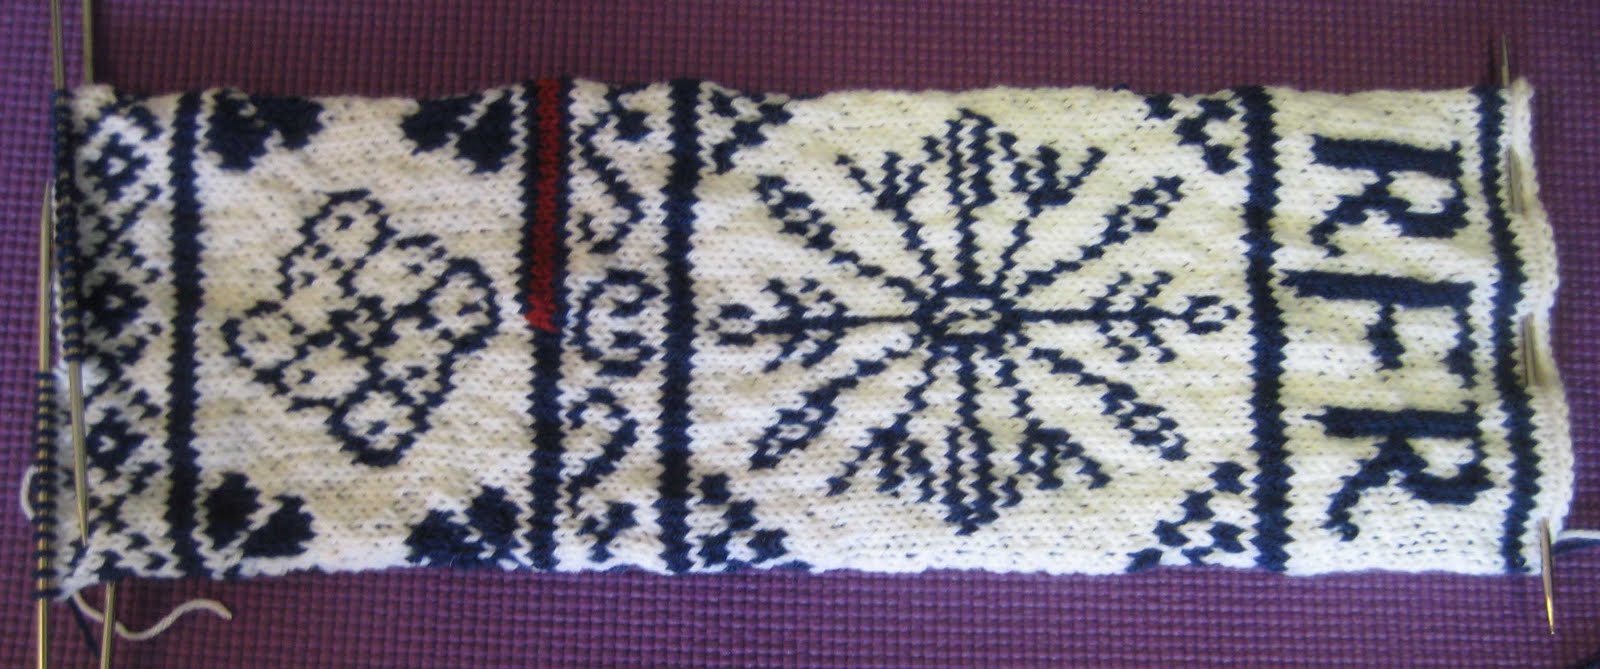 Knit Stockings Patterns